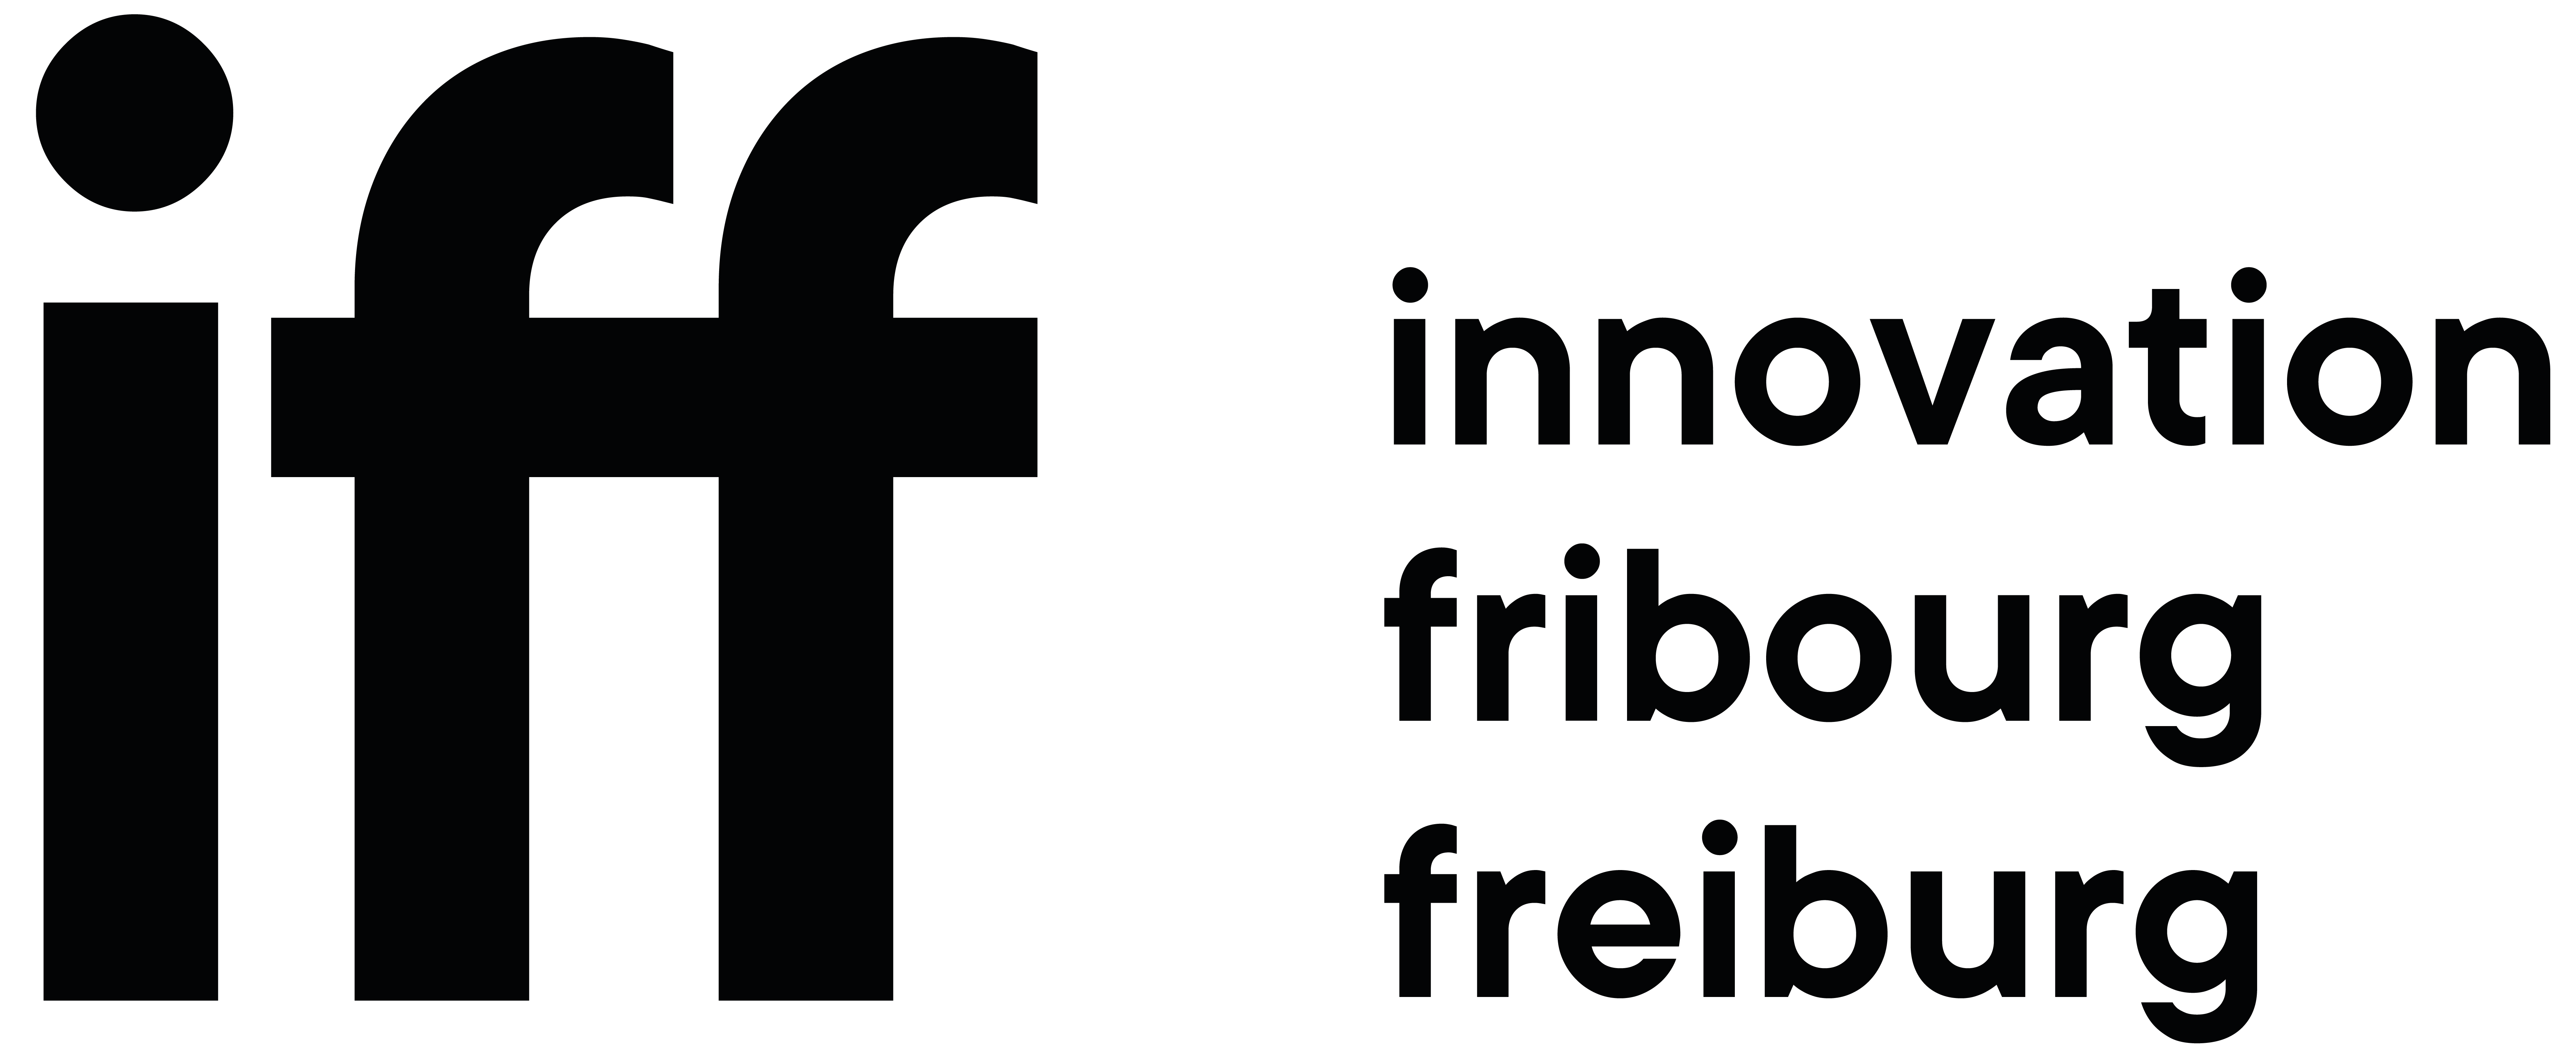 IFF – Innovation Fribourg Freiburg